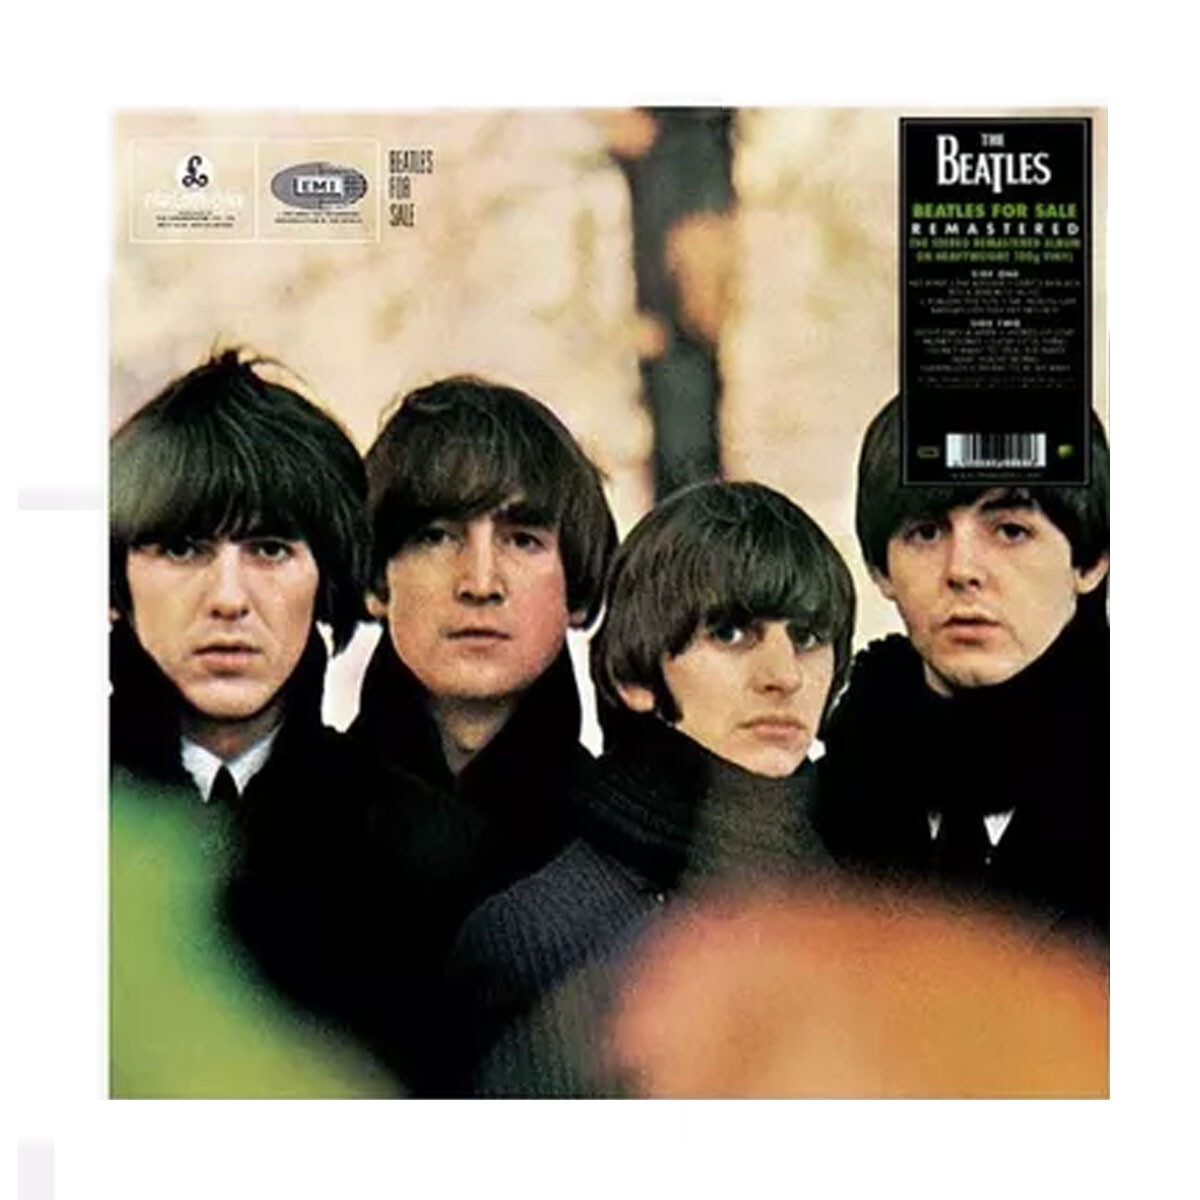 The Beatles-beatles For Sale - Vinilo 